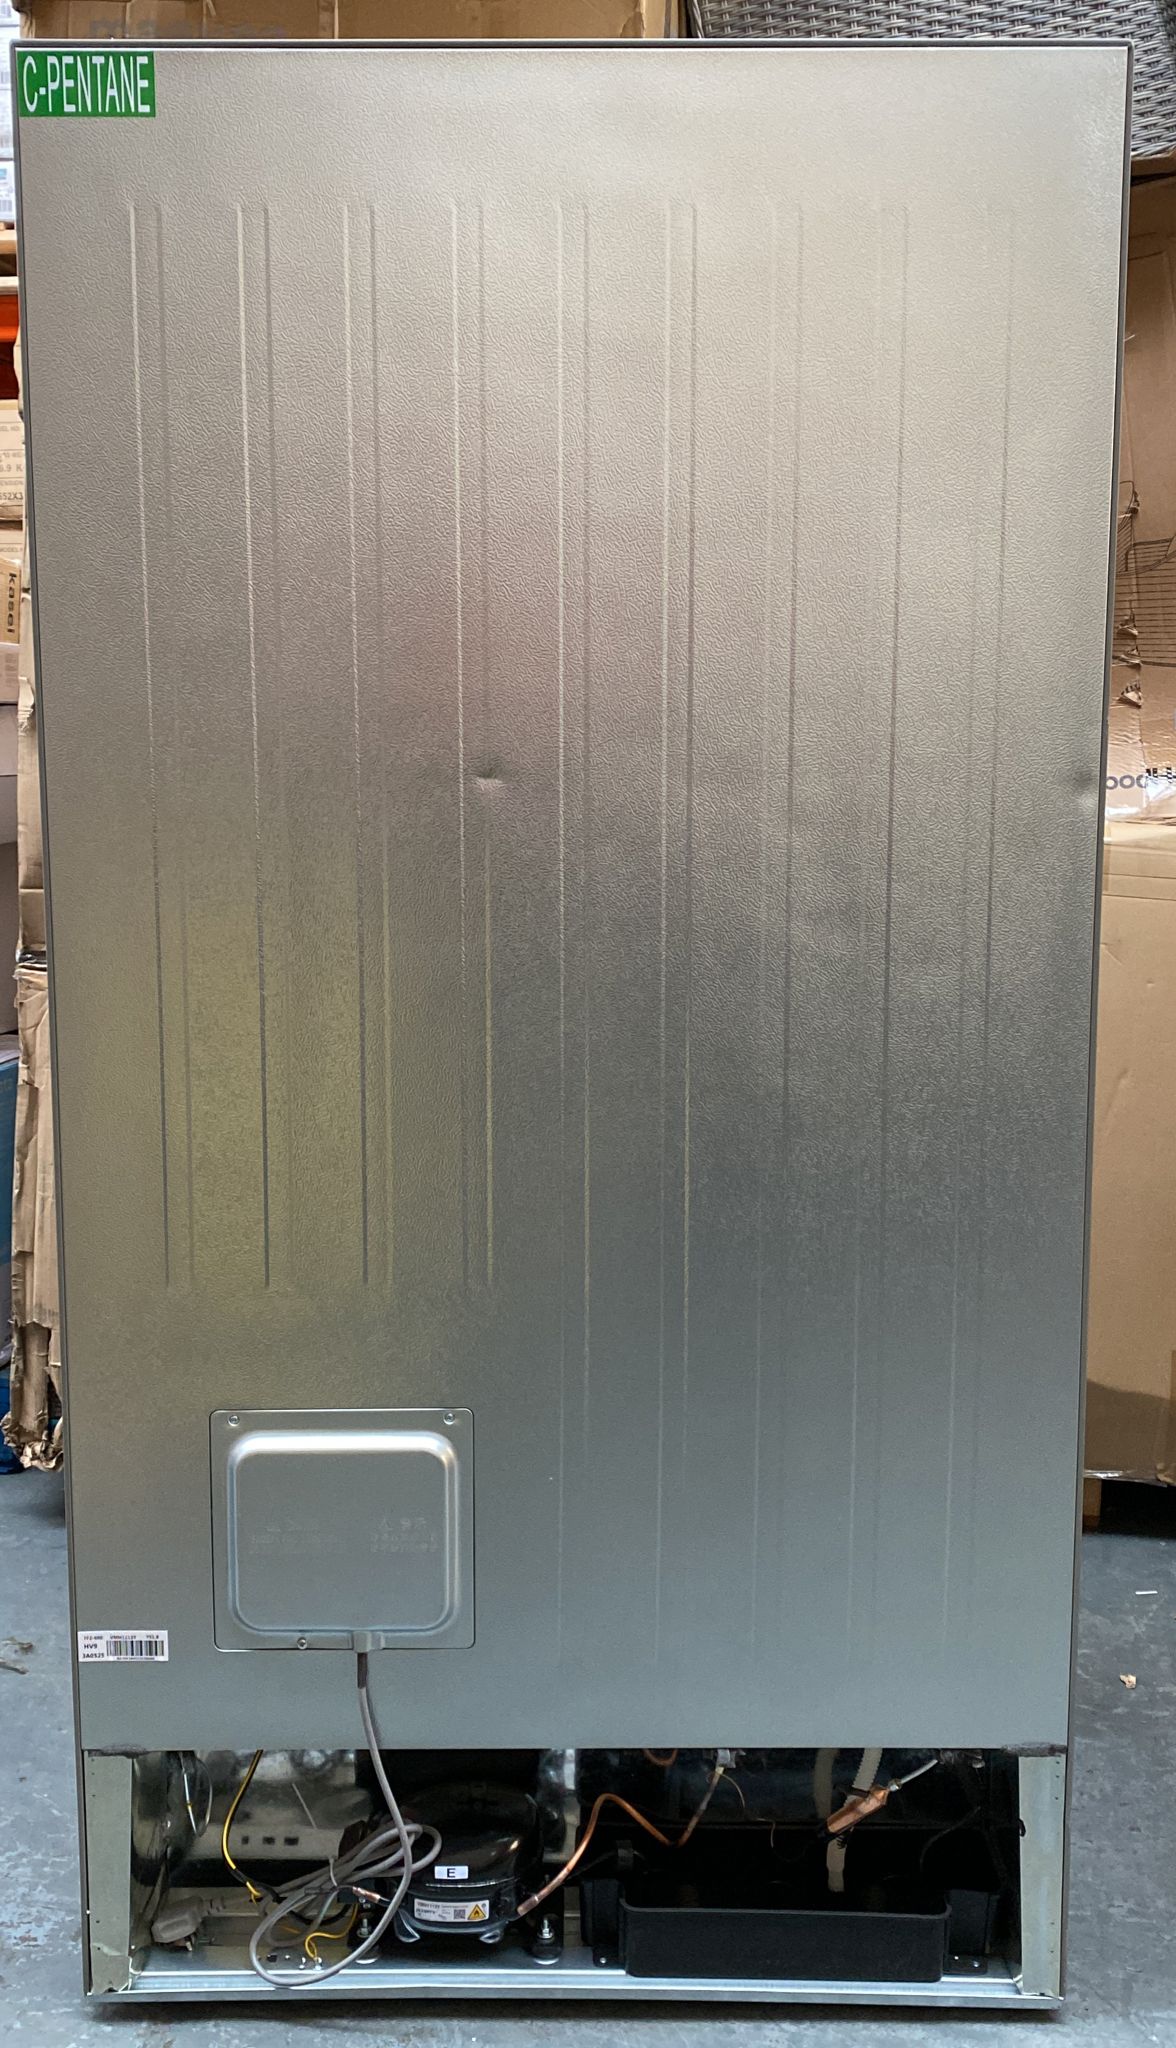 HooverFridge freezer-Freestanding-Stainless steel-silver- 6444